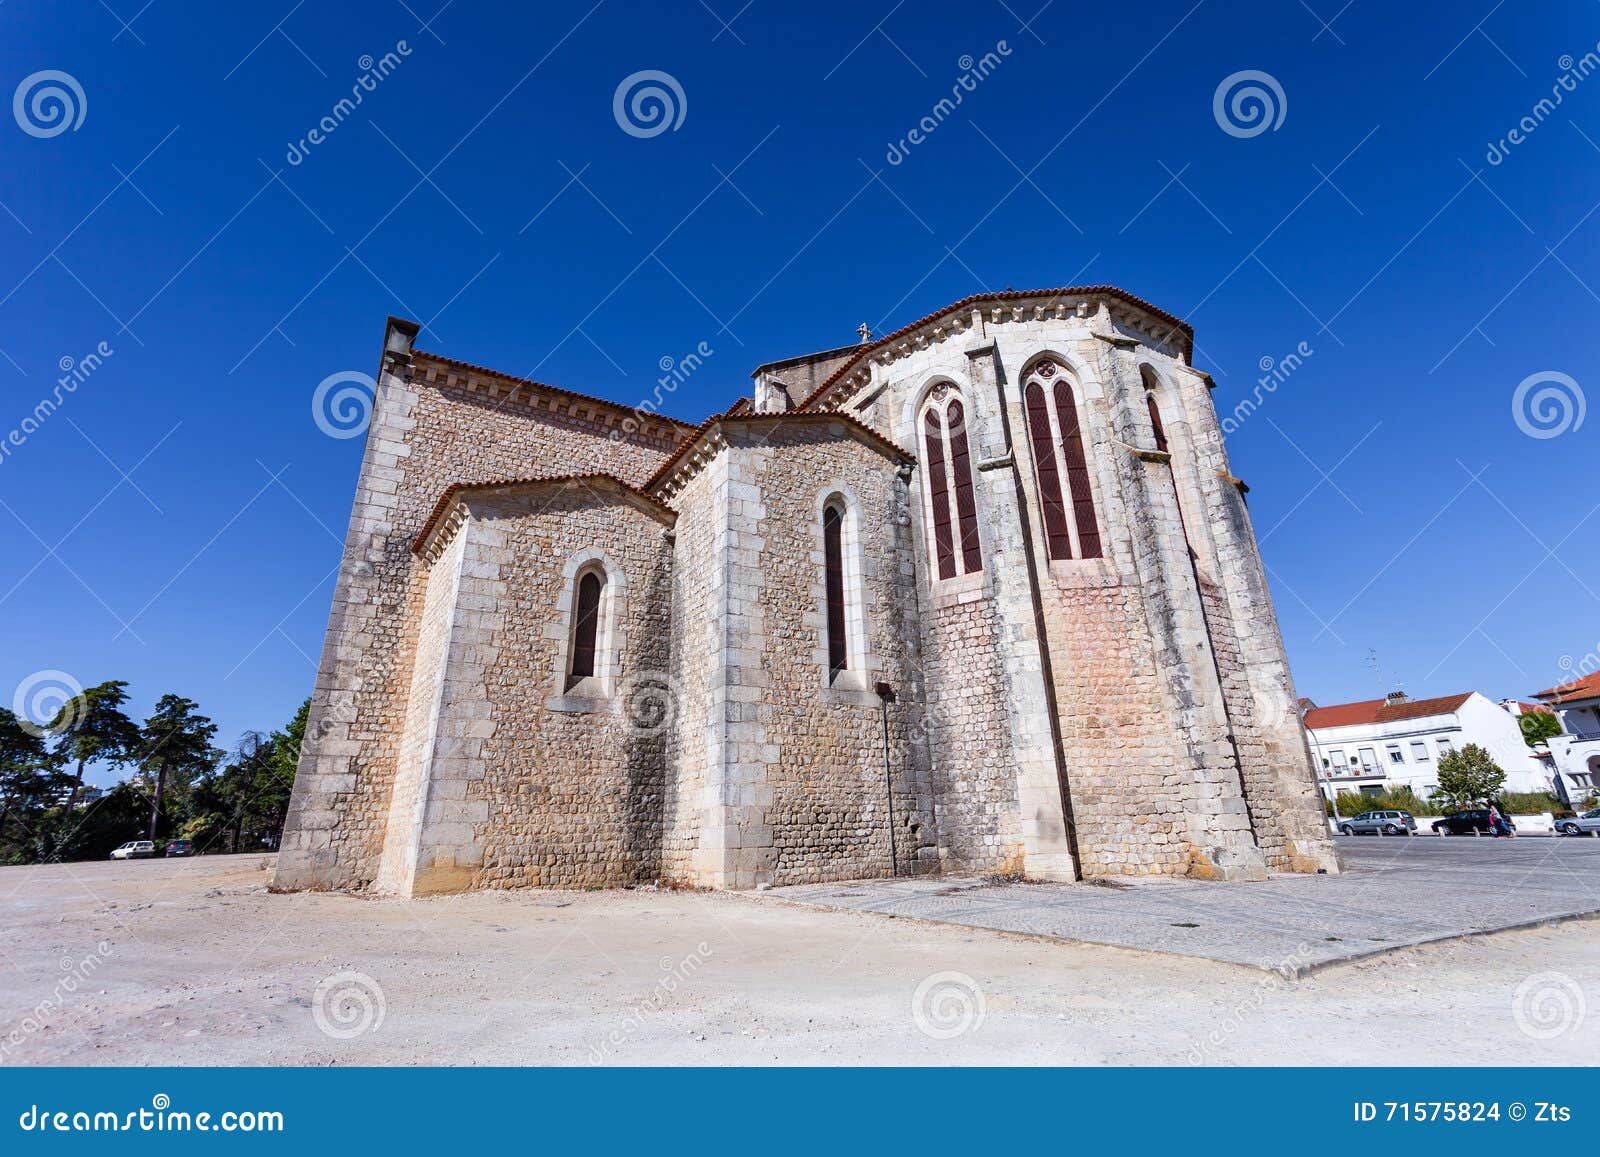 apse exterior of the santa clara church in the city of santarem